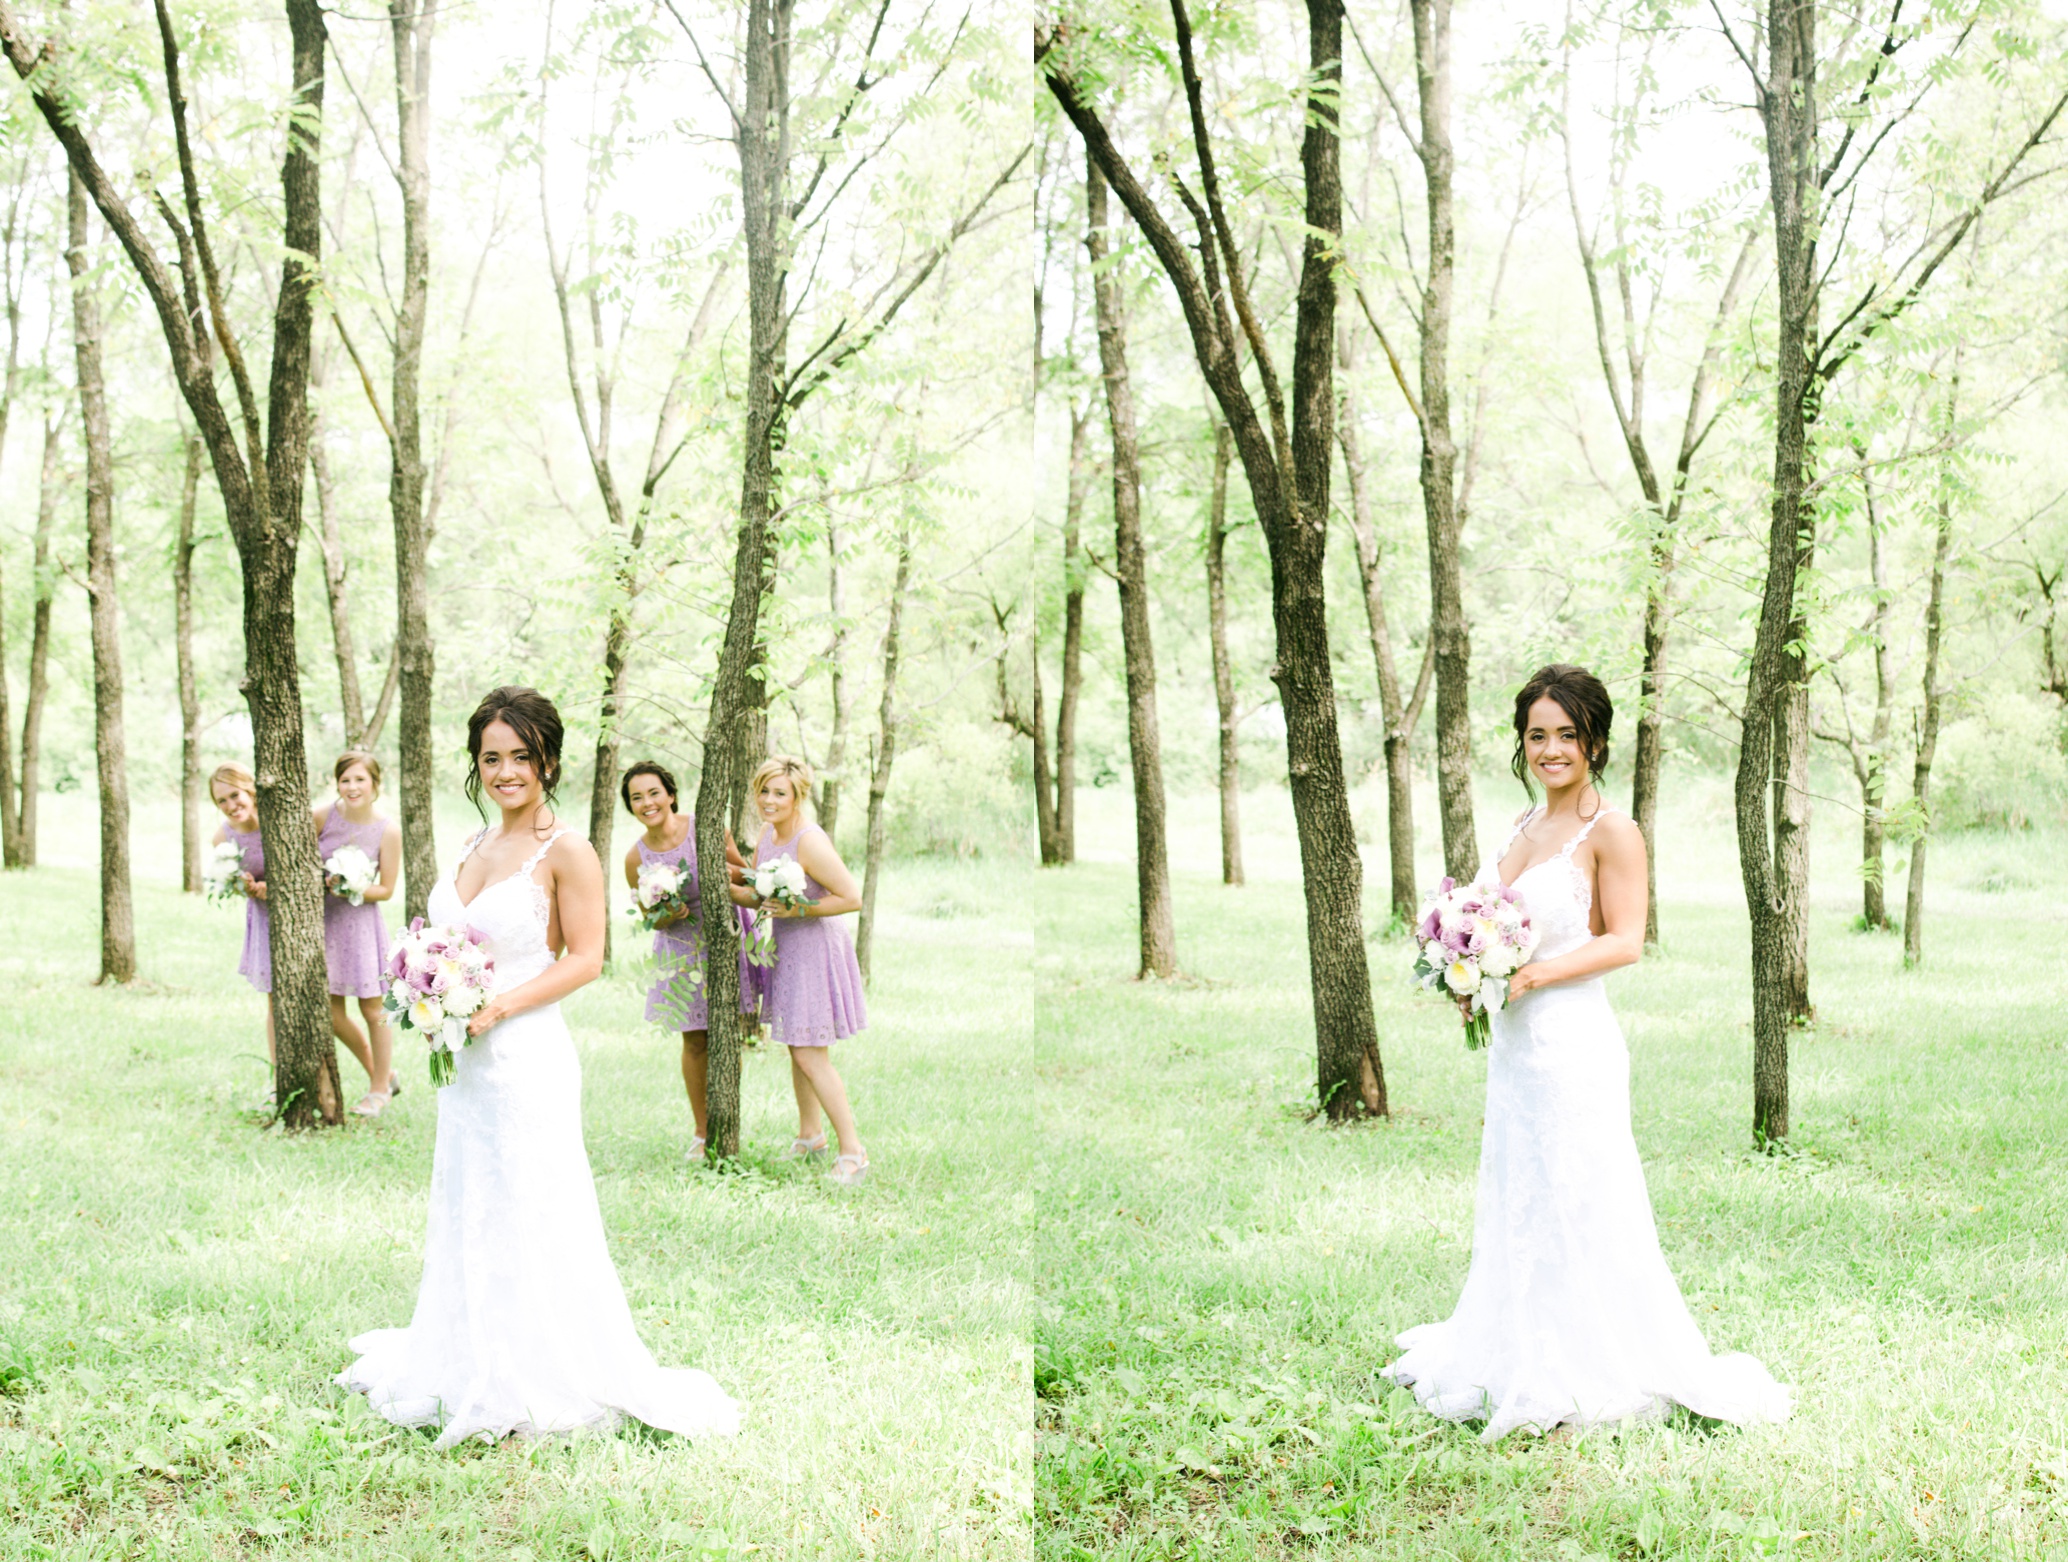 Barnes' Place Rustic Outdoor Wedding | Ali Leigh Photo Minneapolis Wedding Photographer_0115.jpg